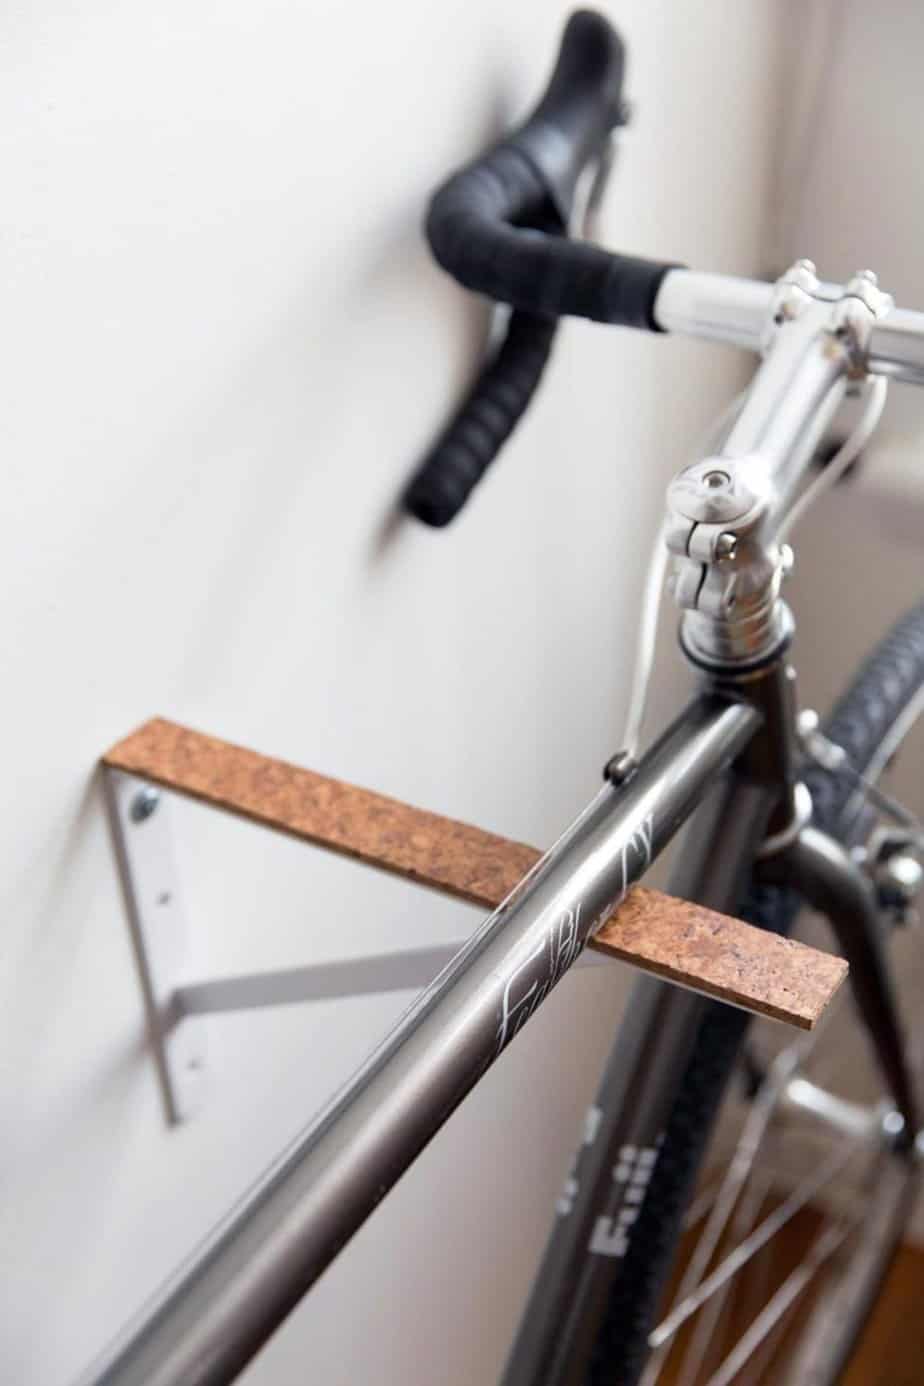 A bike suspended on a shelf bracket